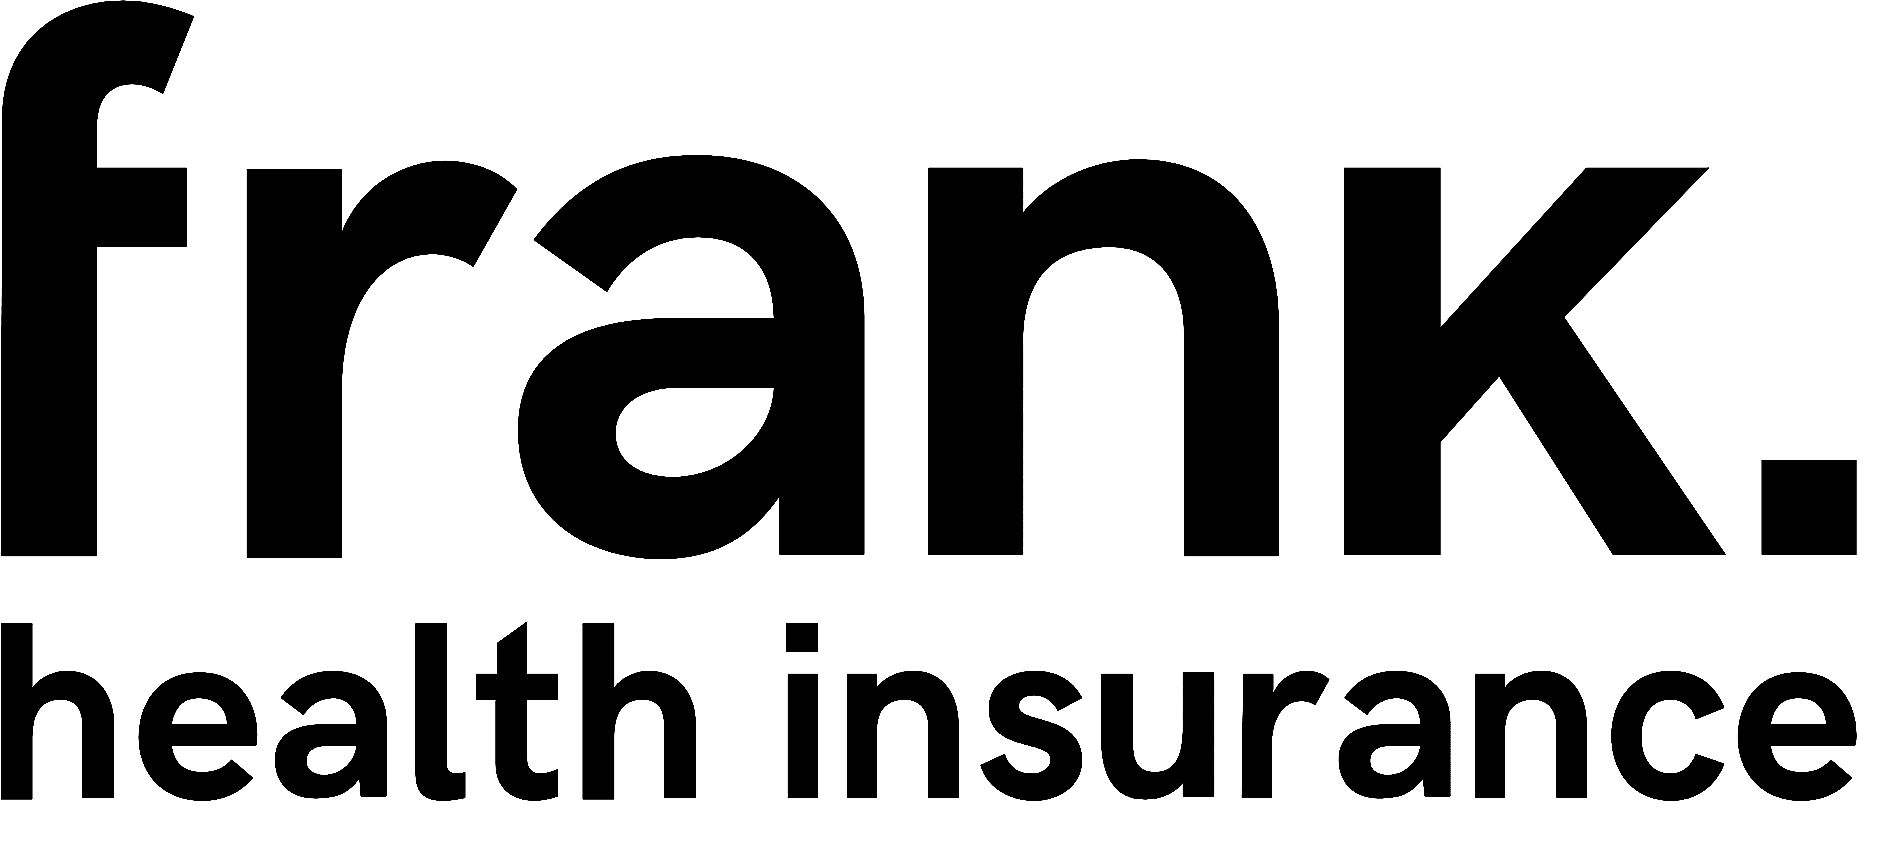 Frank health logo